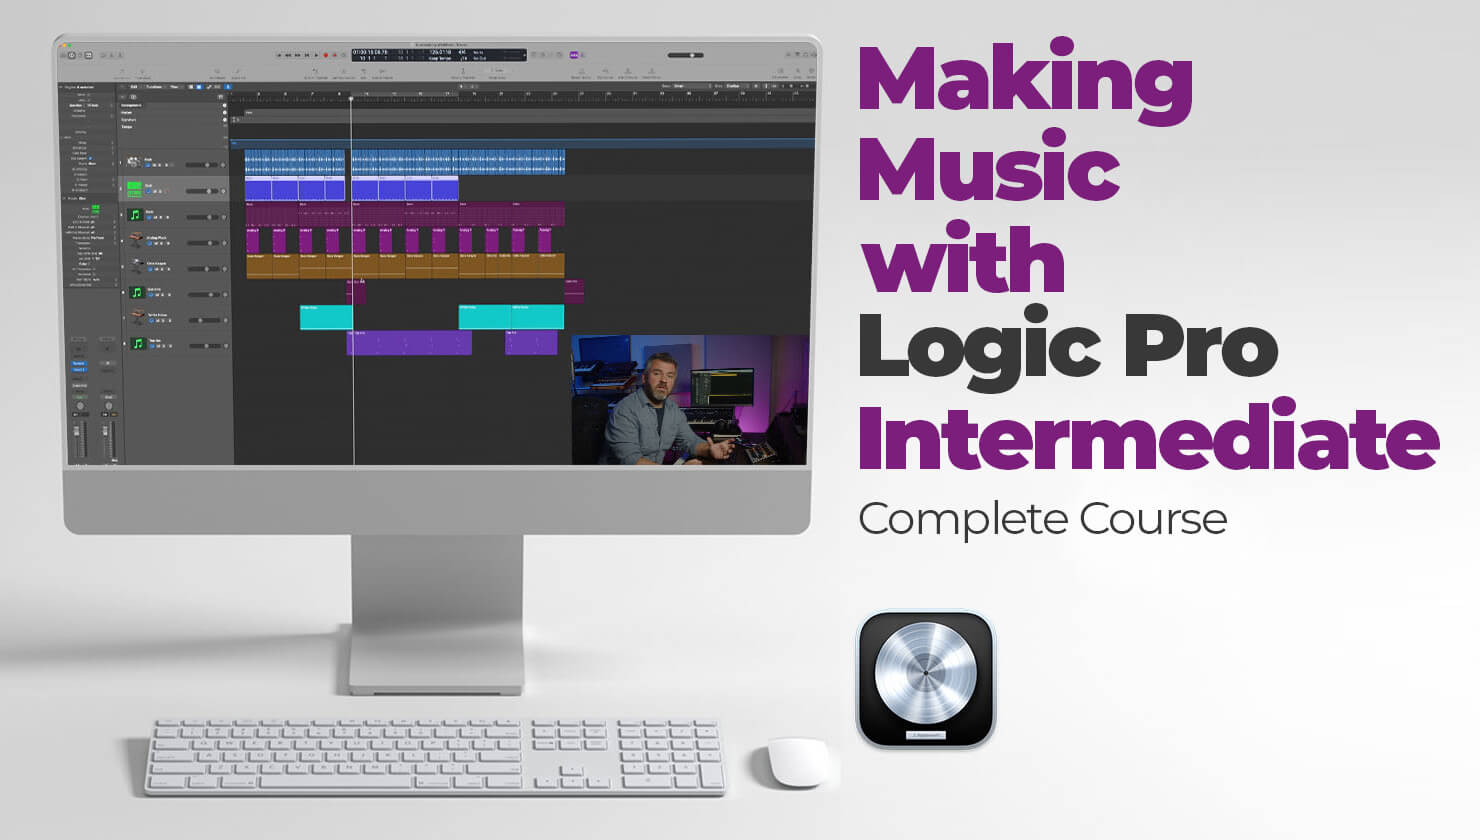 Making Music with Logic Pro: Intermediate